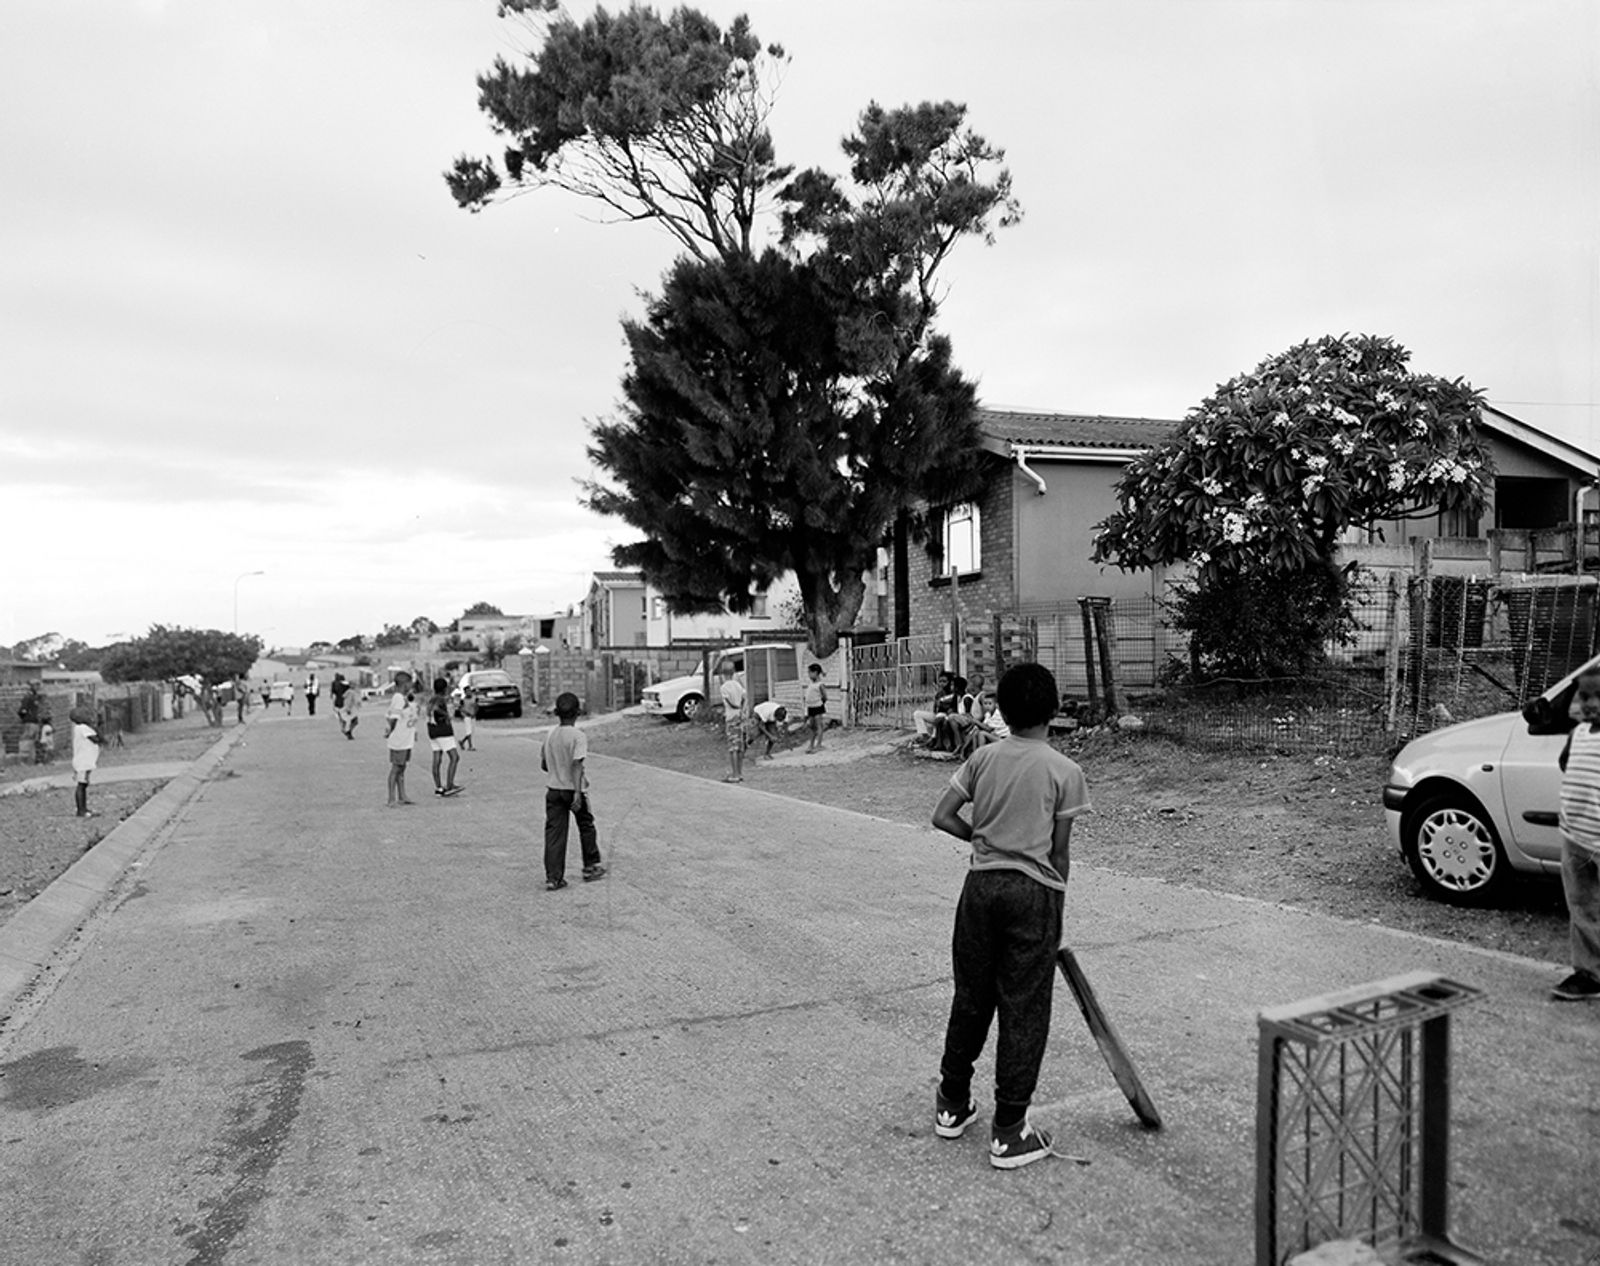 © Farren van Wyk - Kids playing in the street